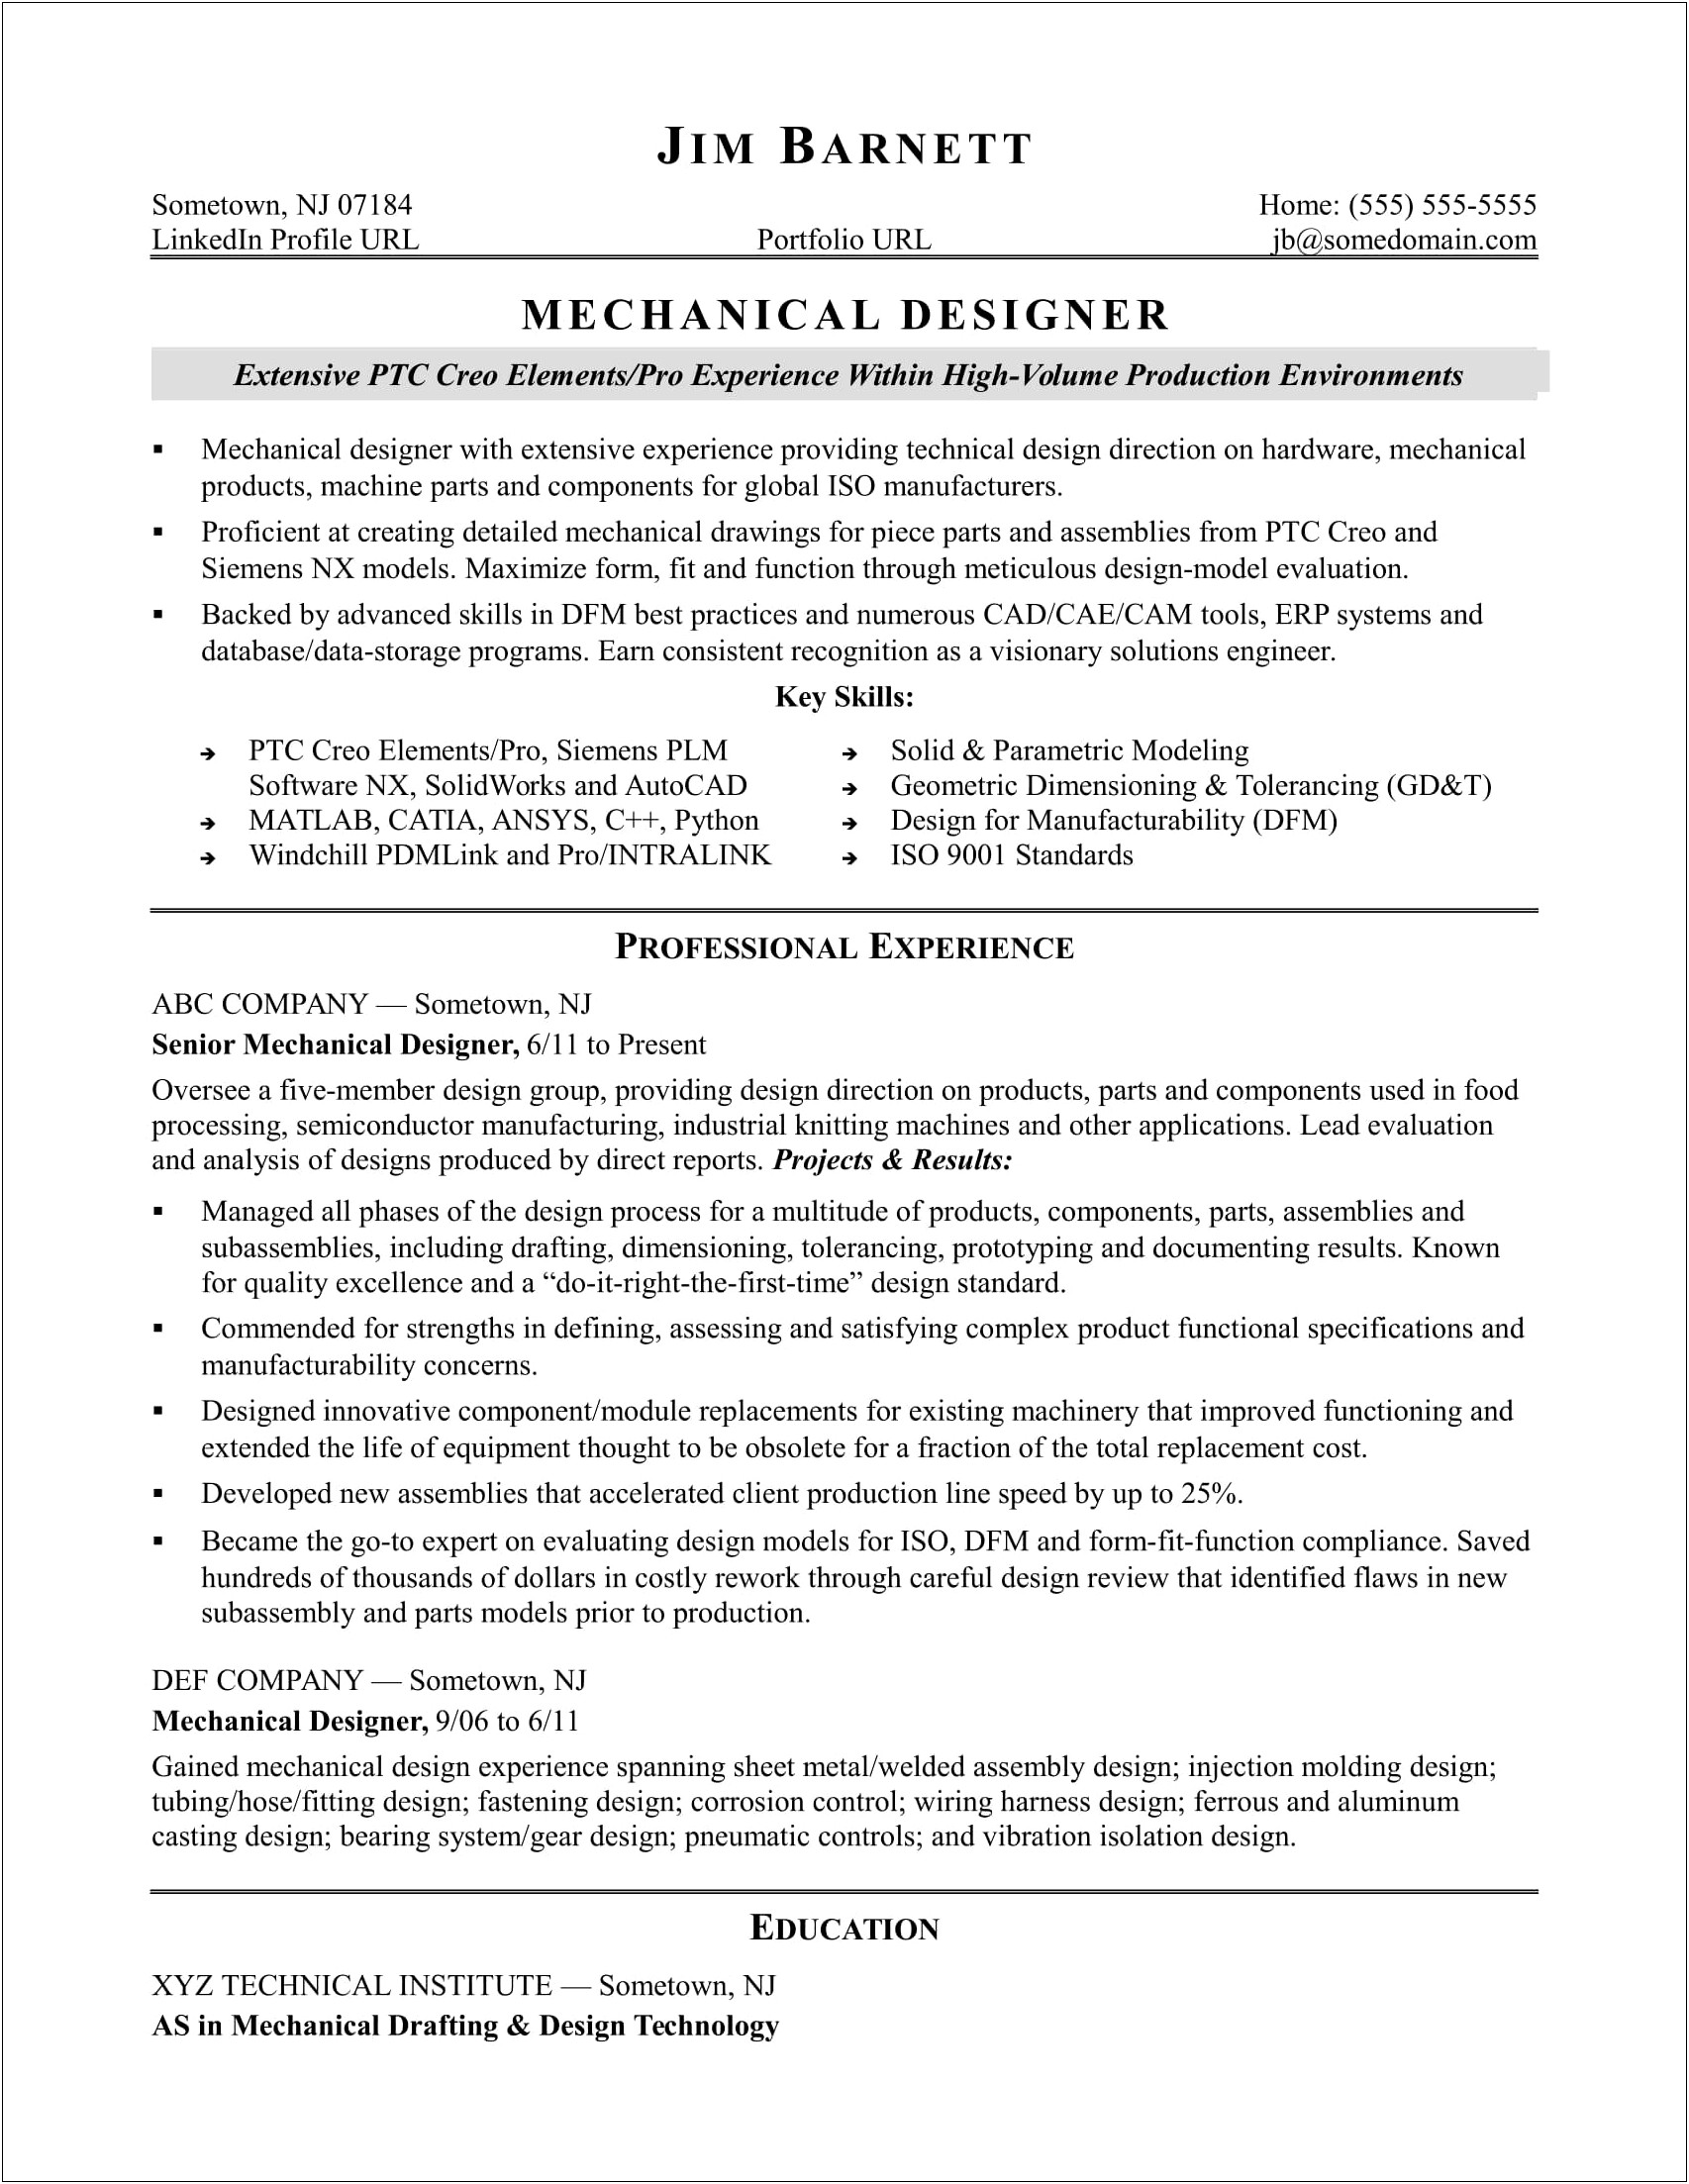 Resume Summary Of Entry Level Mechanical Engineer